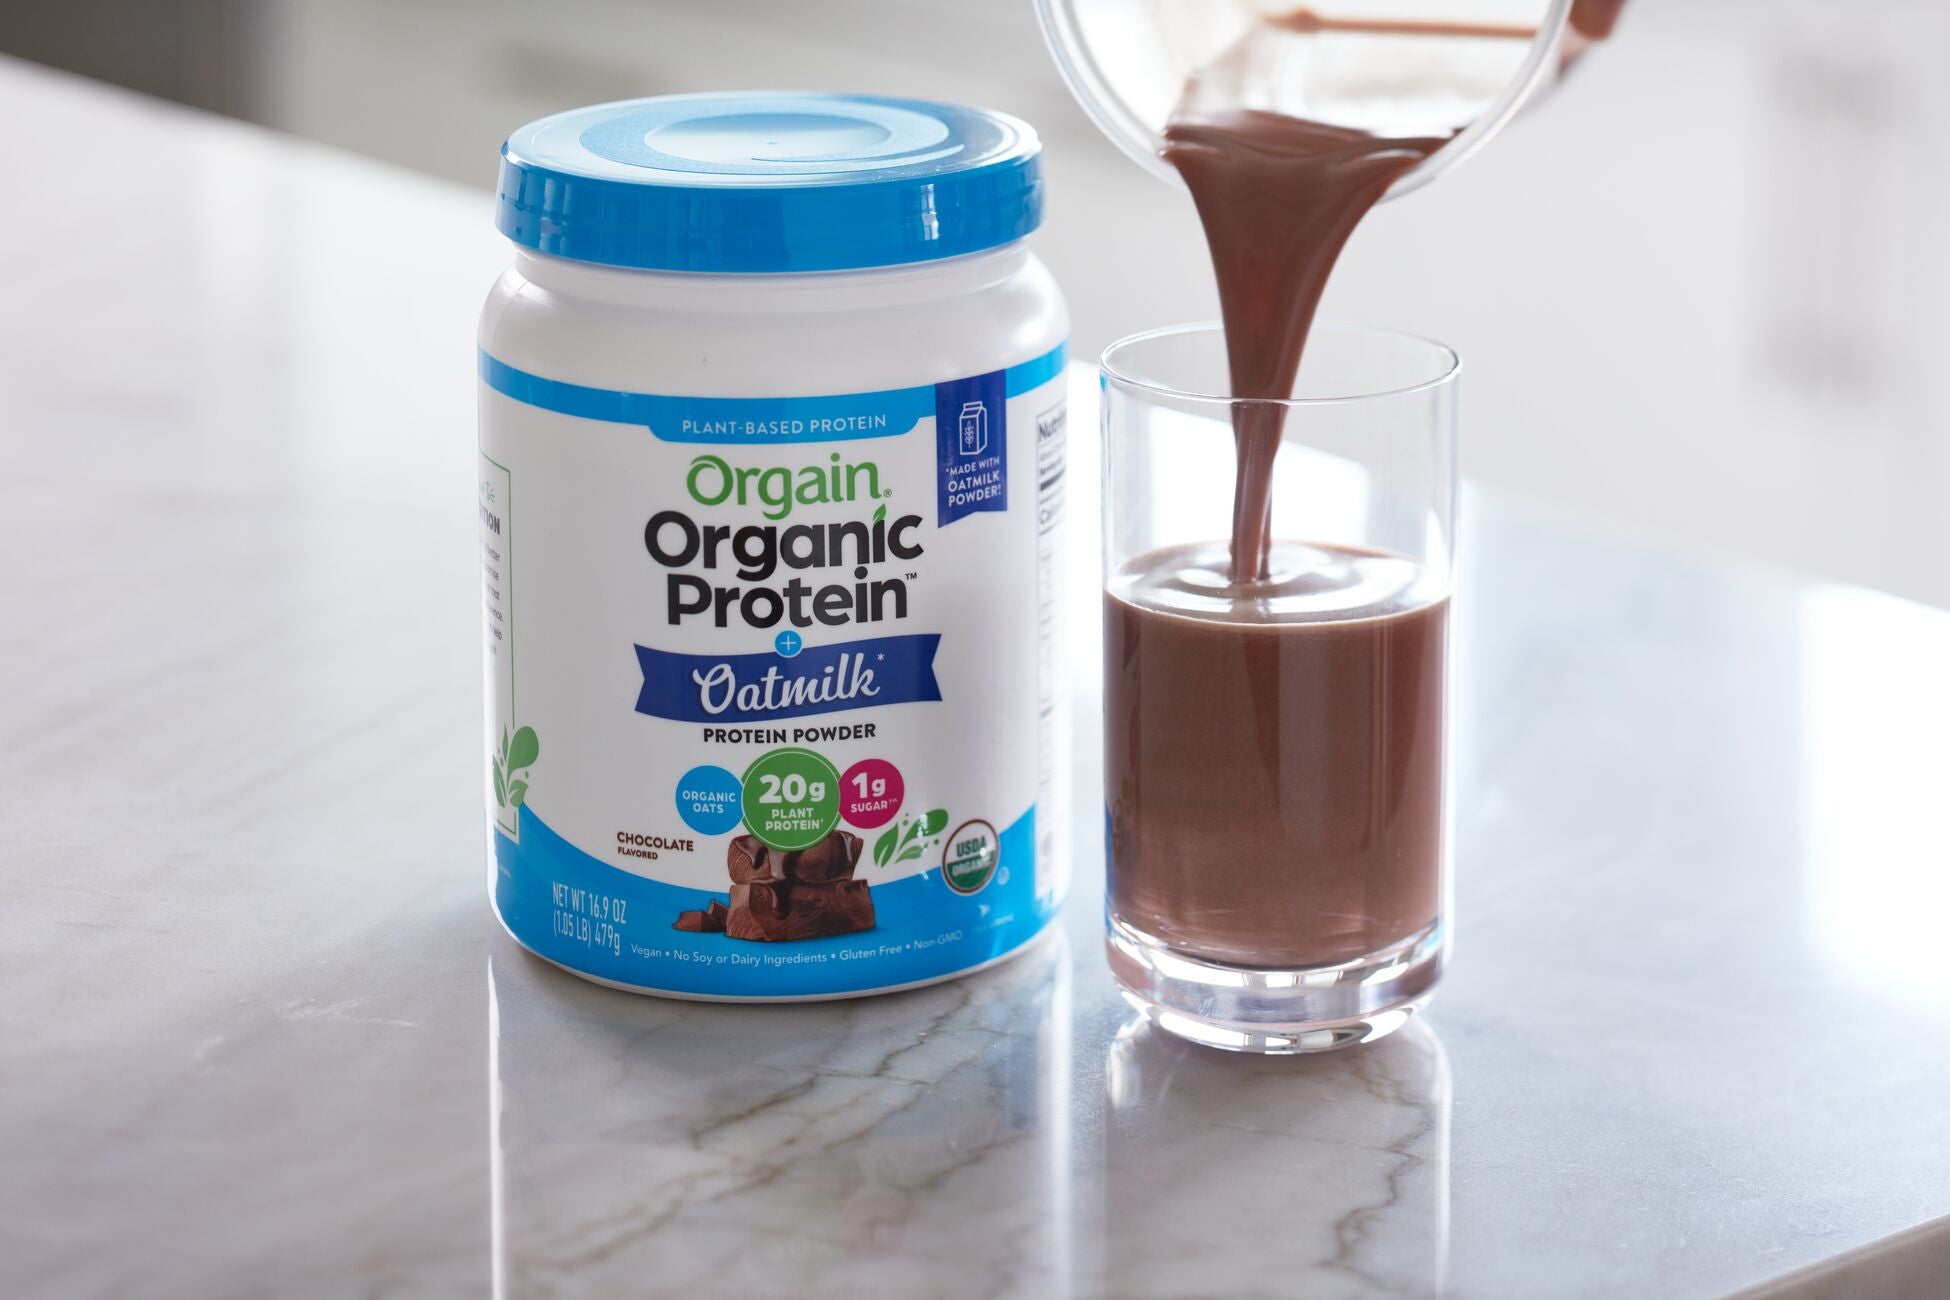 Introducing Organic Protein + Oatmilk